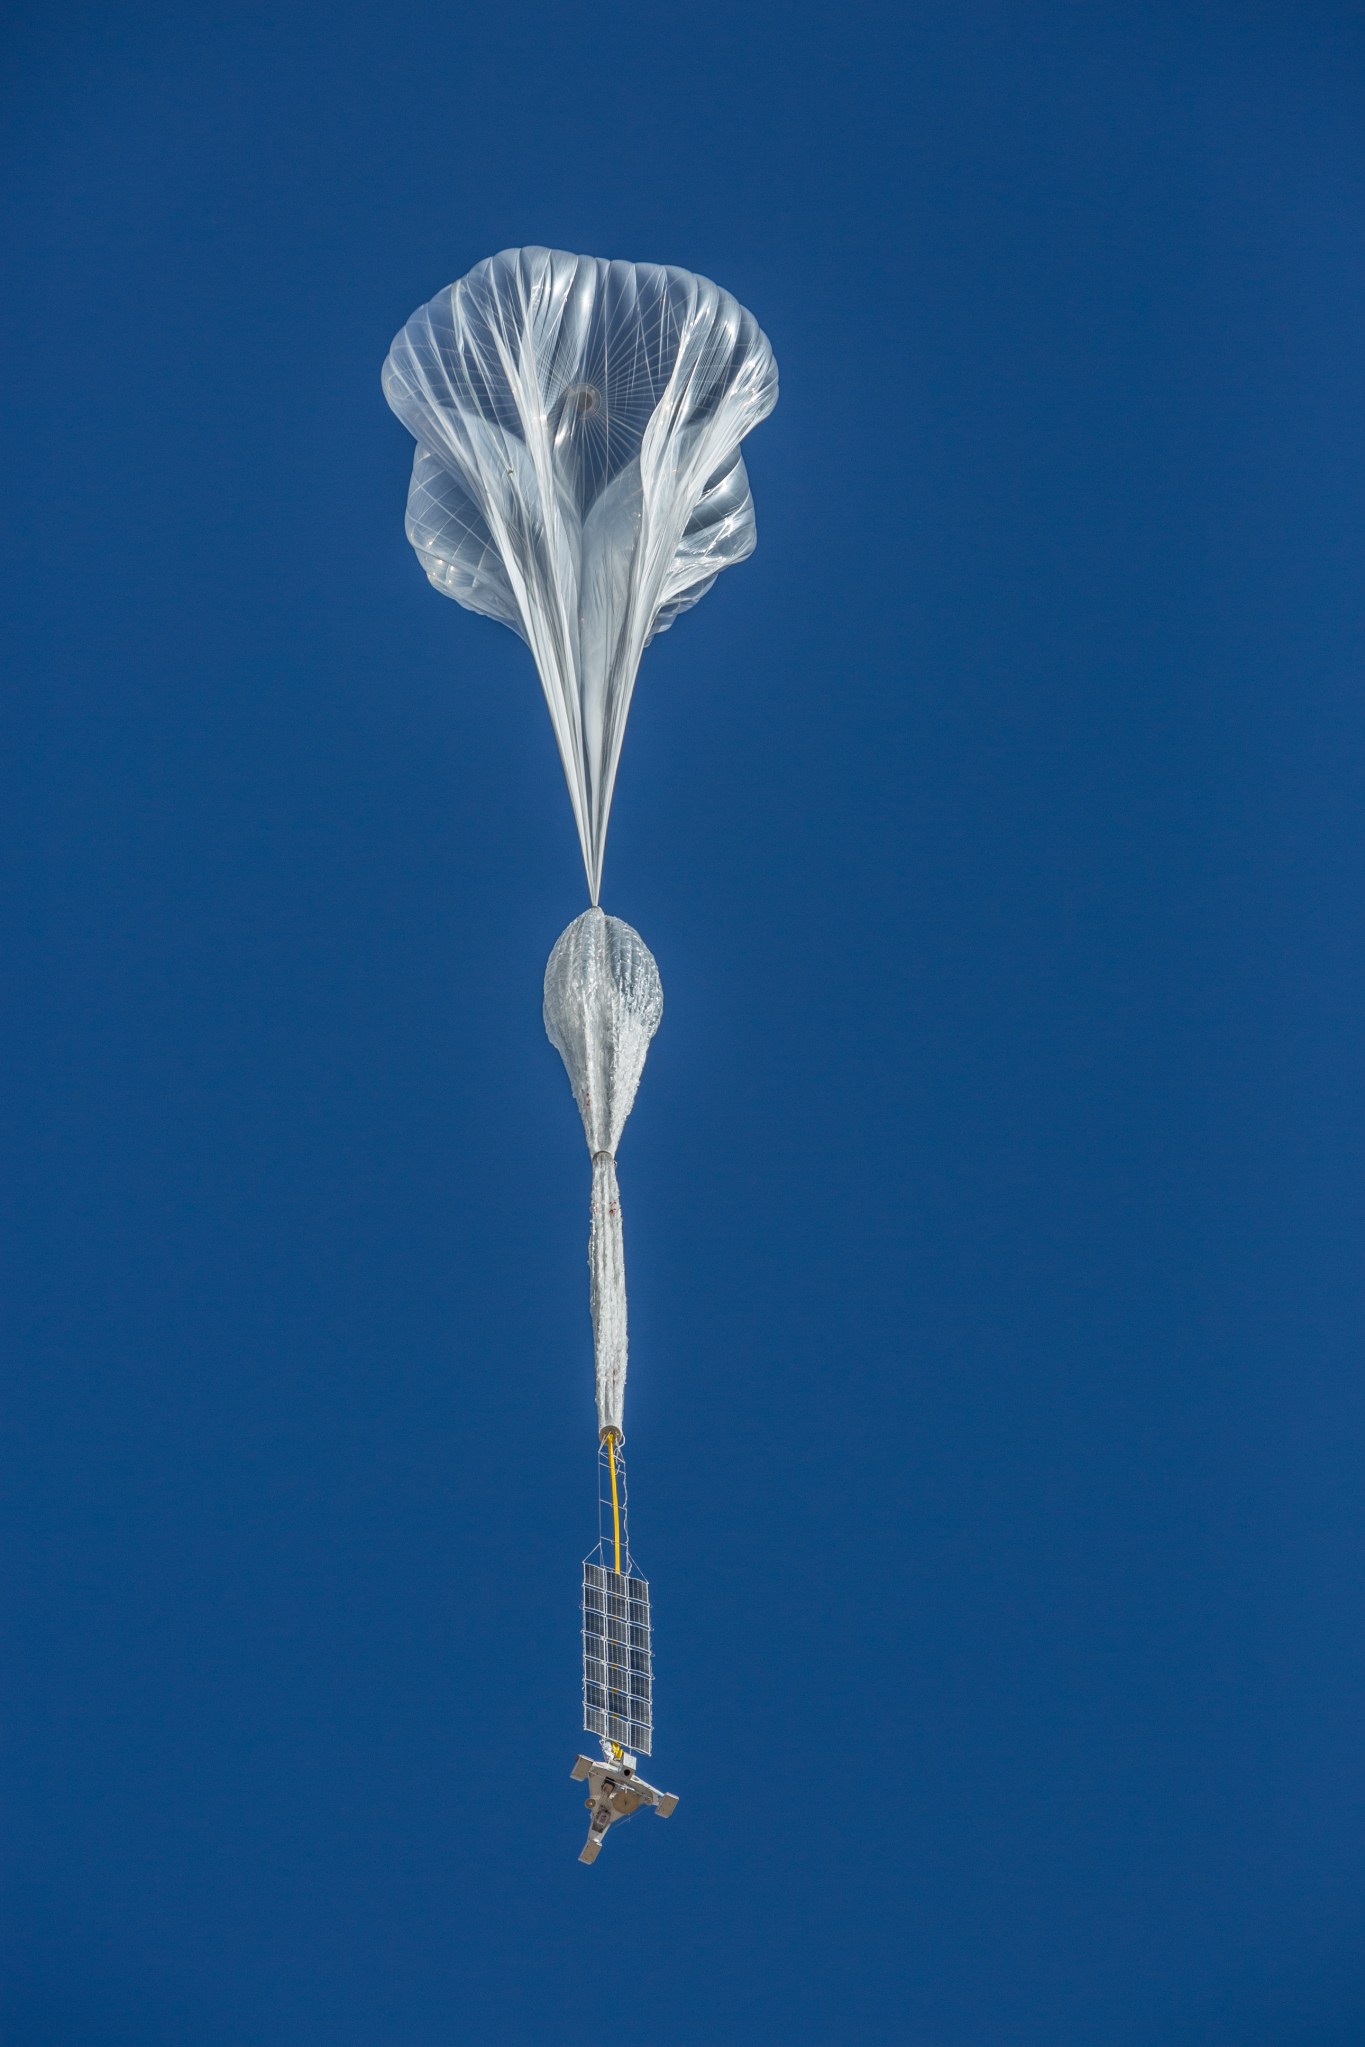 The World View Stratollite high altitude balloon in flight.